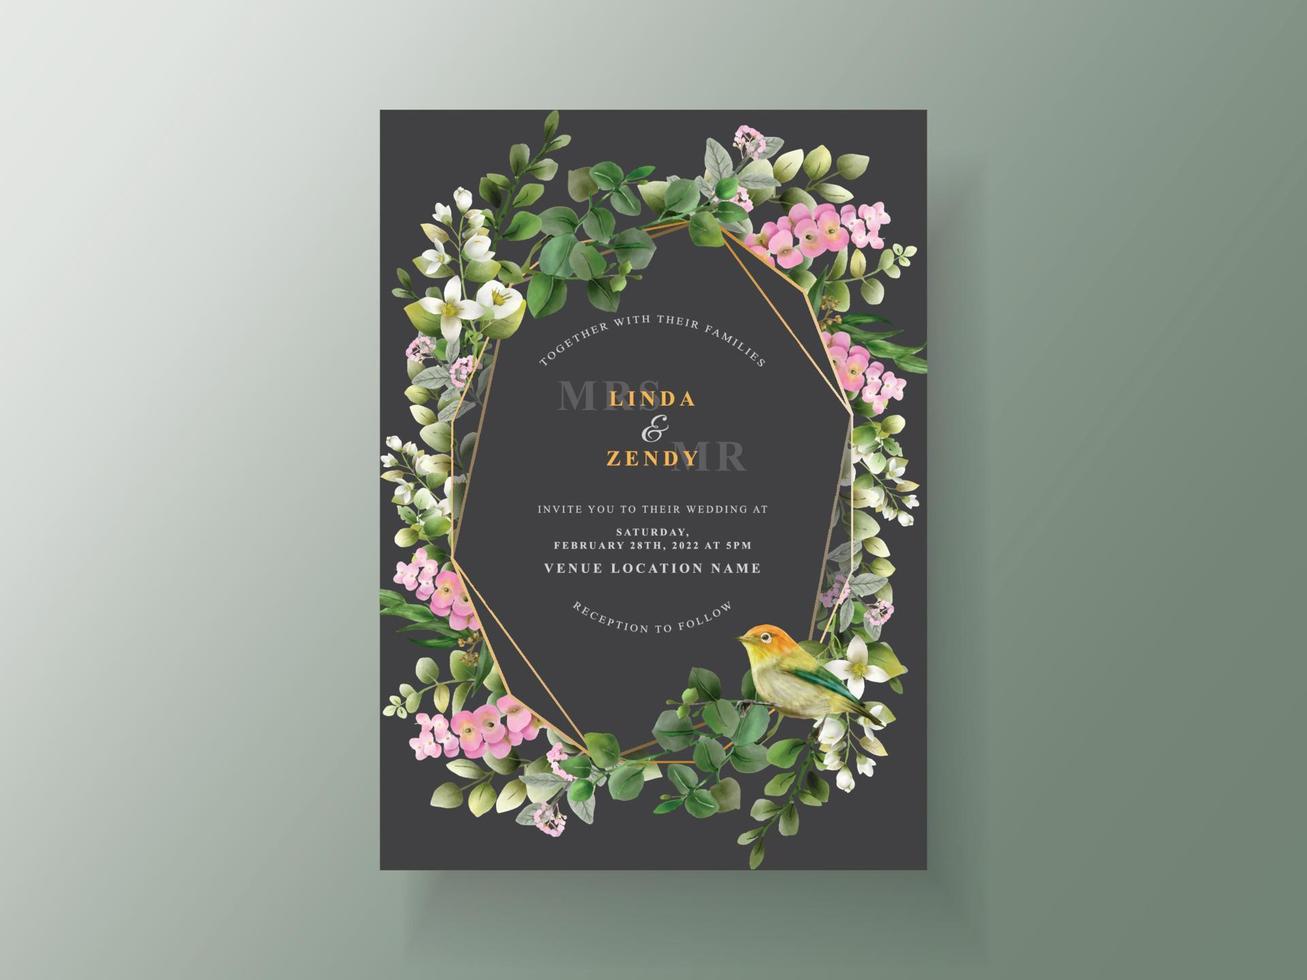 Greenery eucalyptus wedding invitations vector